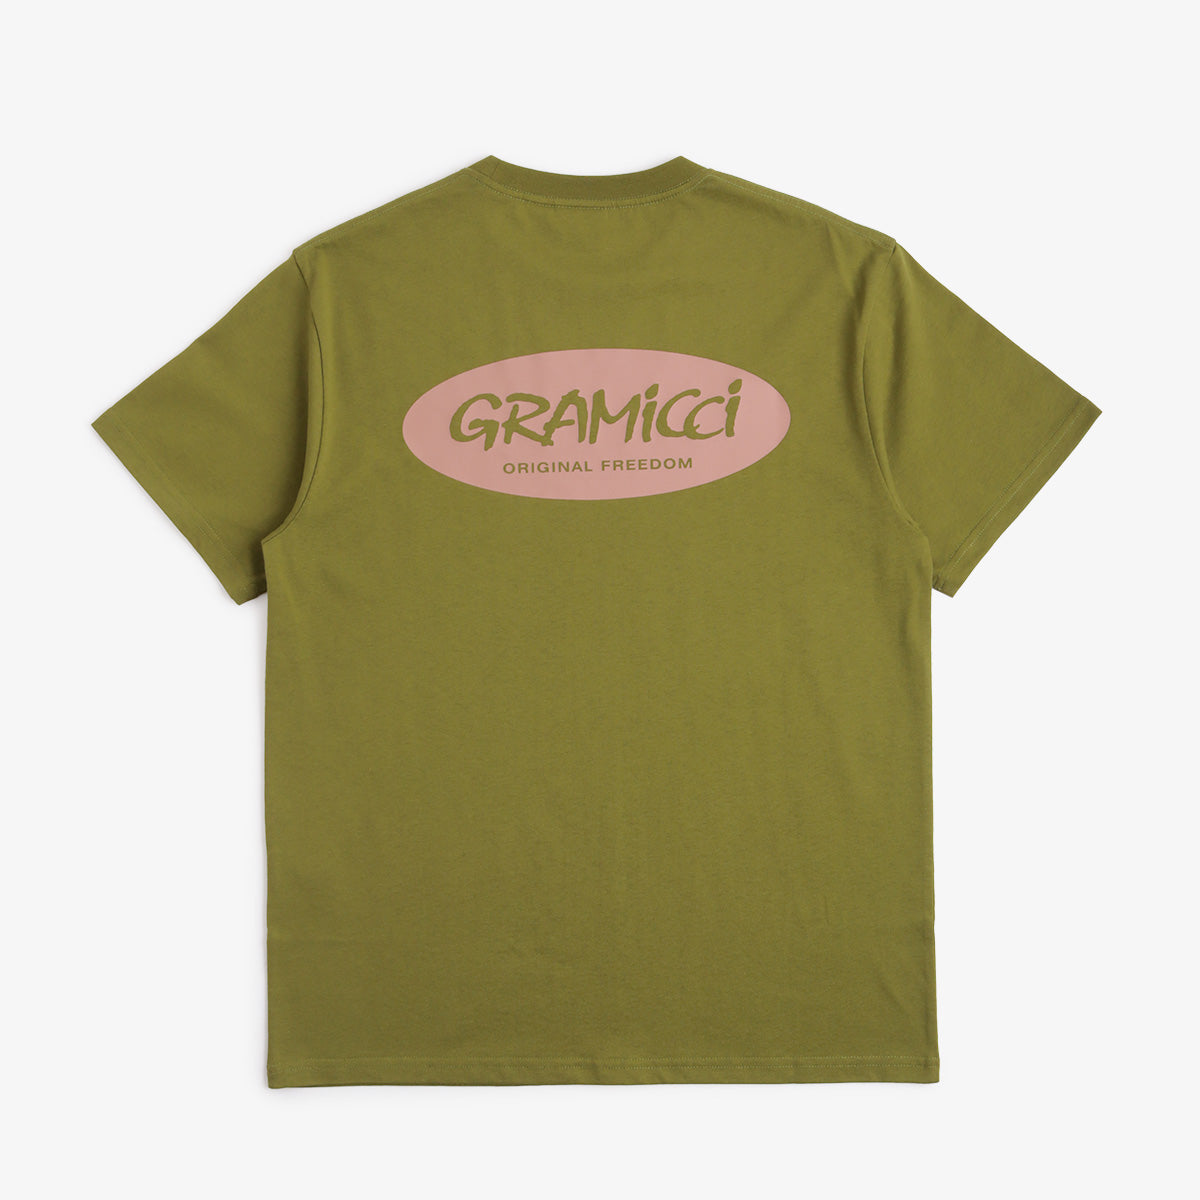 Gramicci Original Freedom Oval T-Shirt